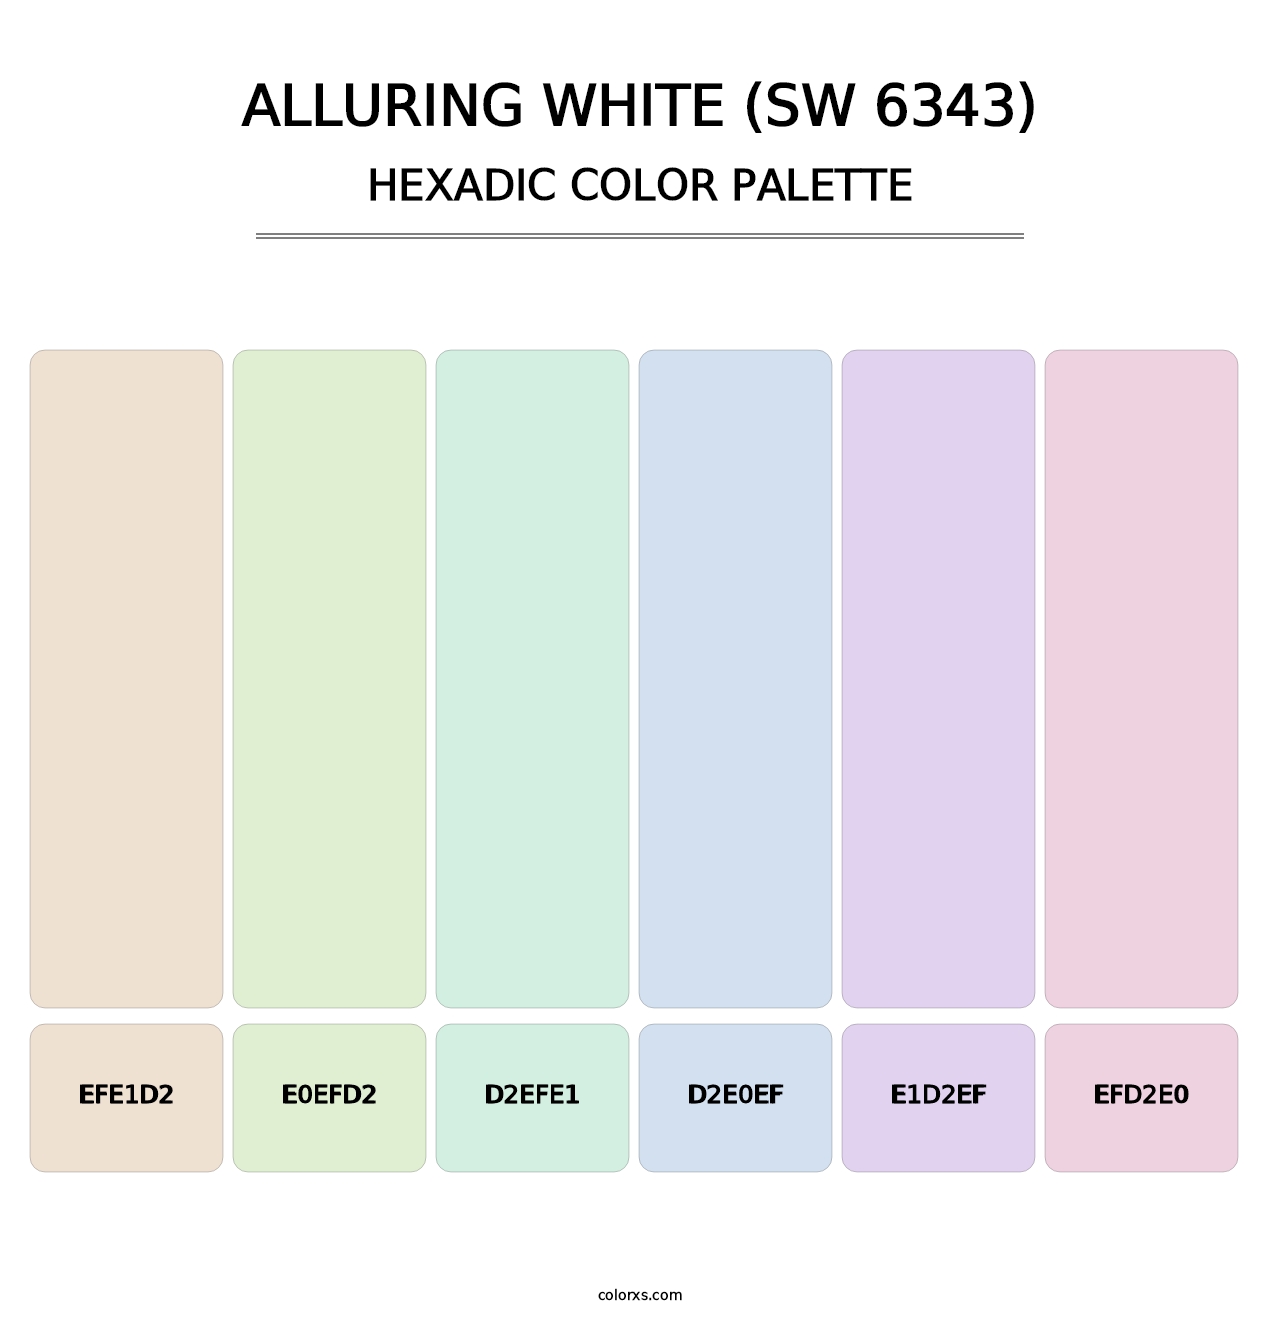 Alluring White (SW 6343) - Hexadic Color Palette